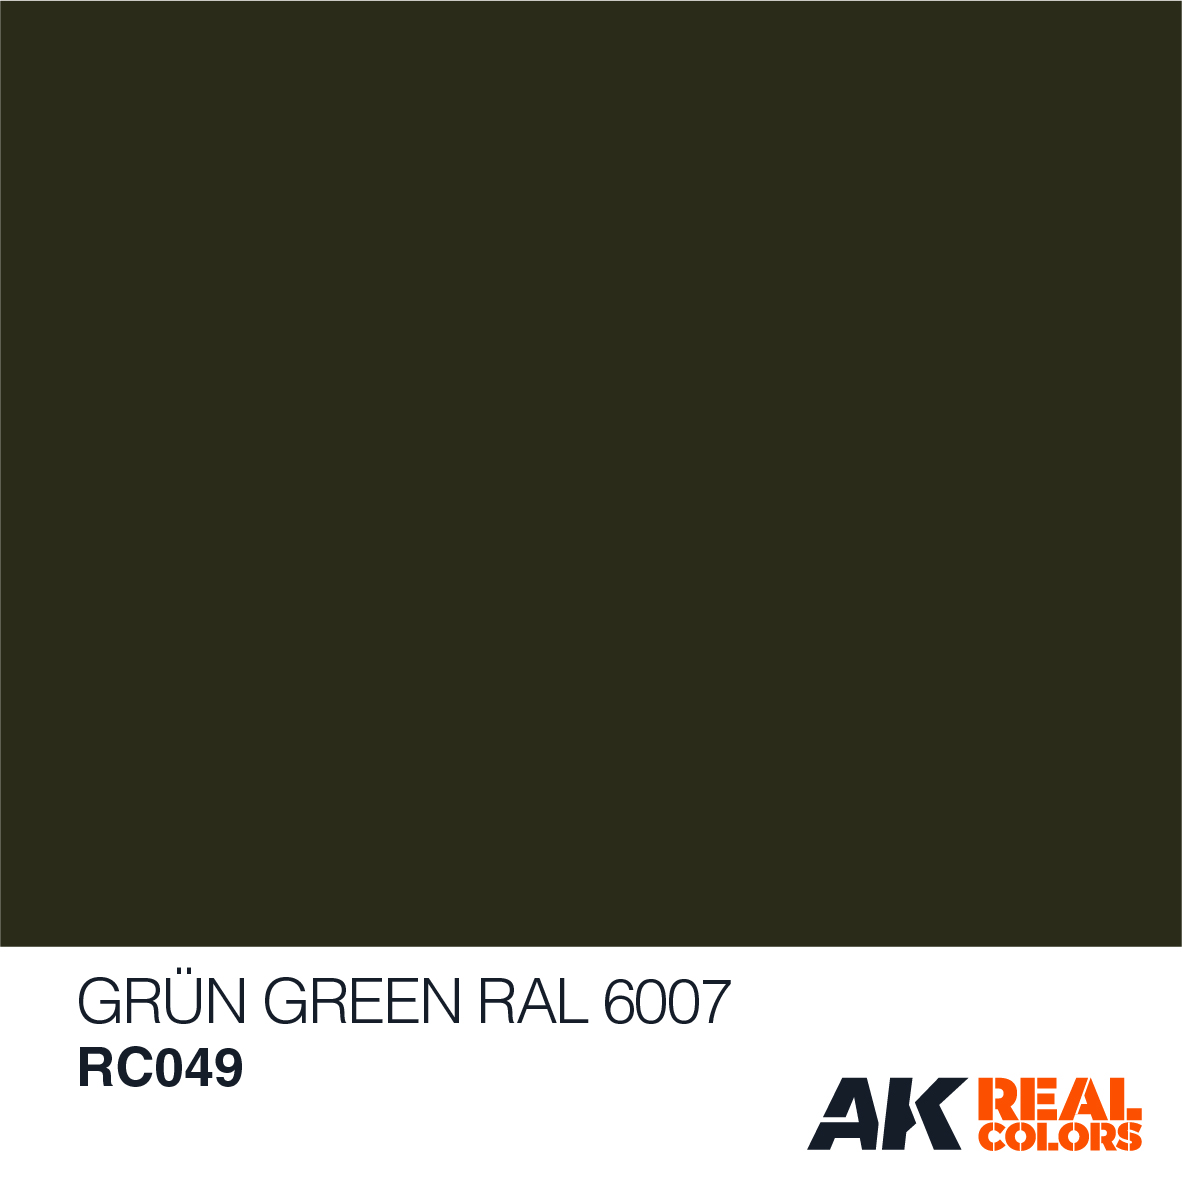 Grün – Green RAL 6007